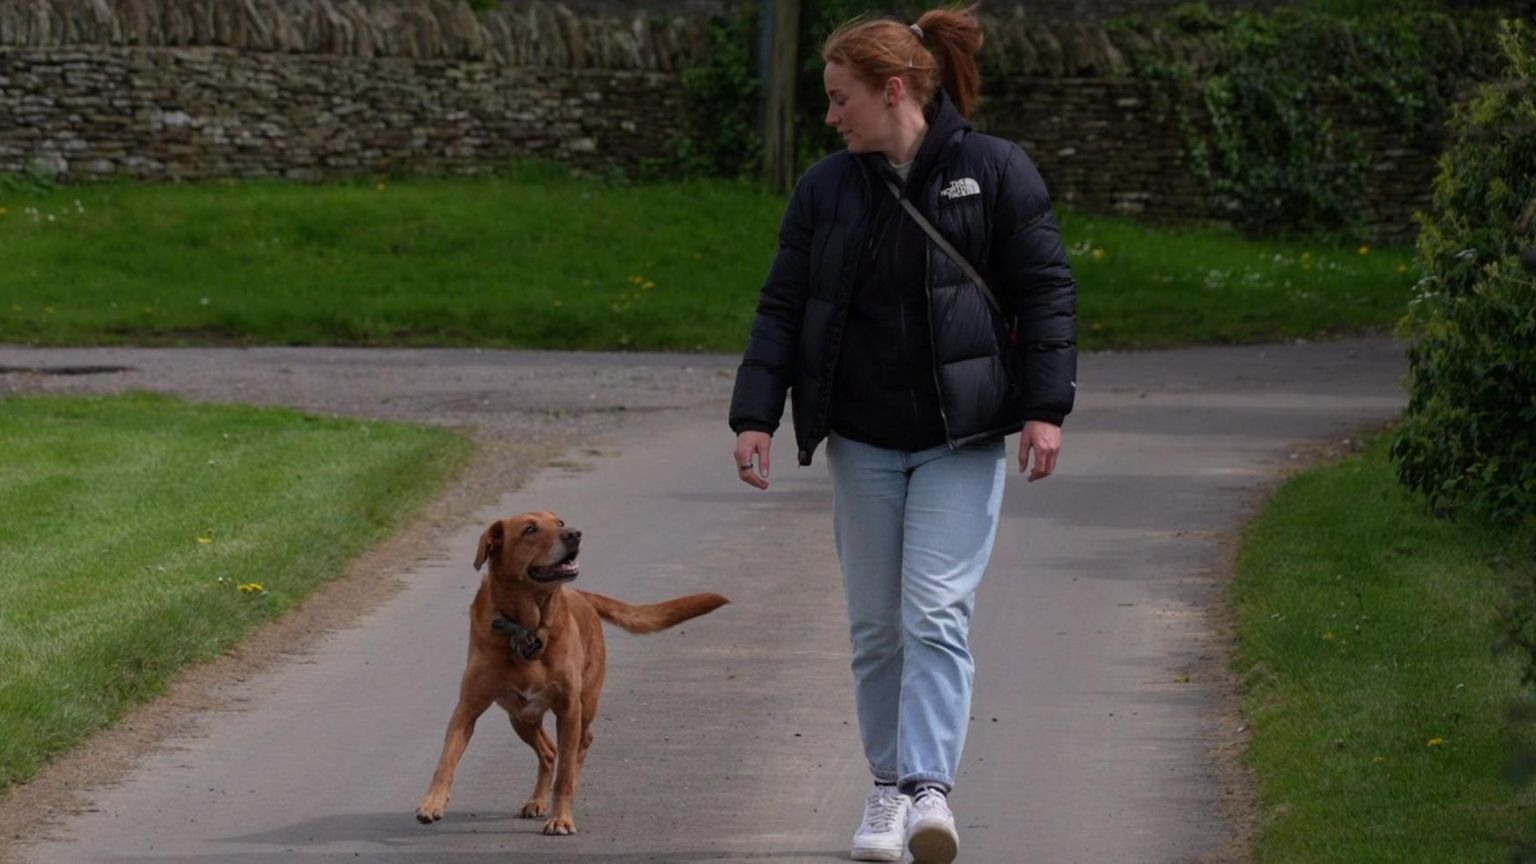 Rachel Furness with her dog, Bailey